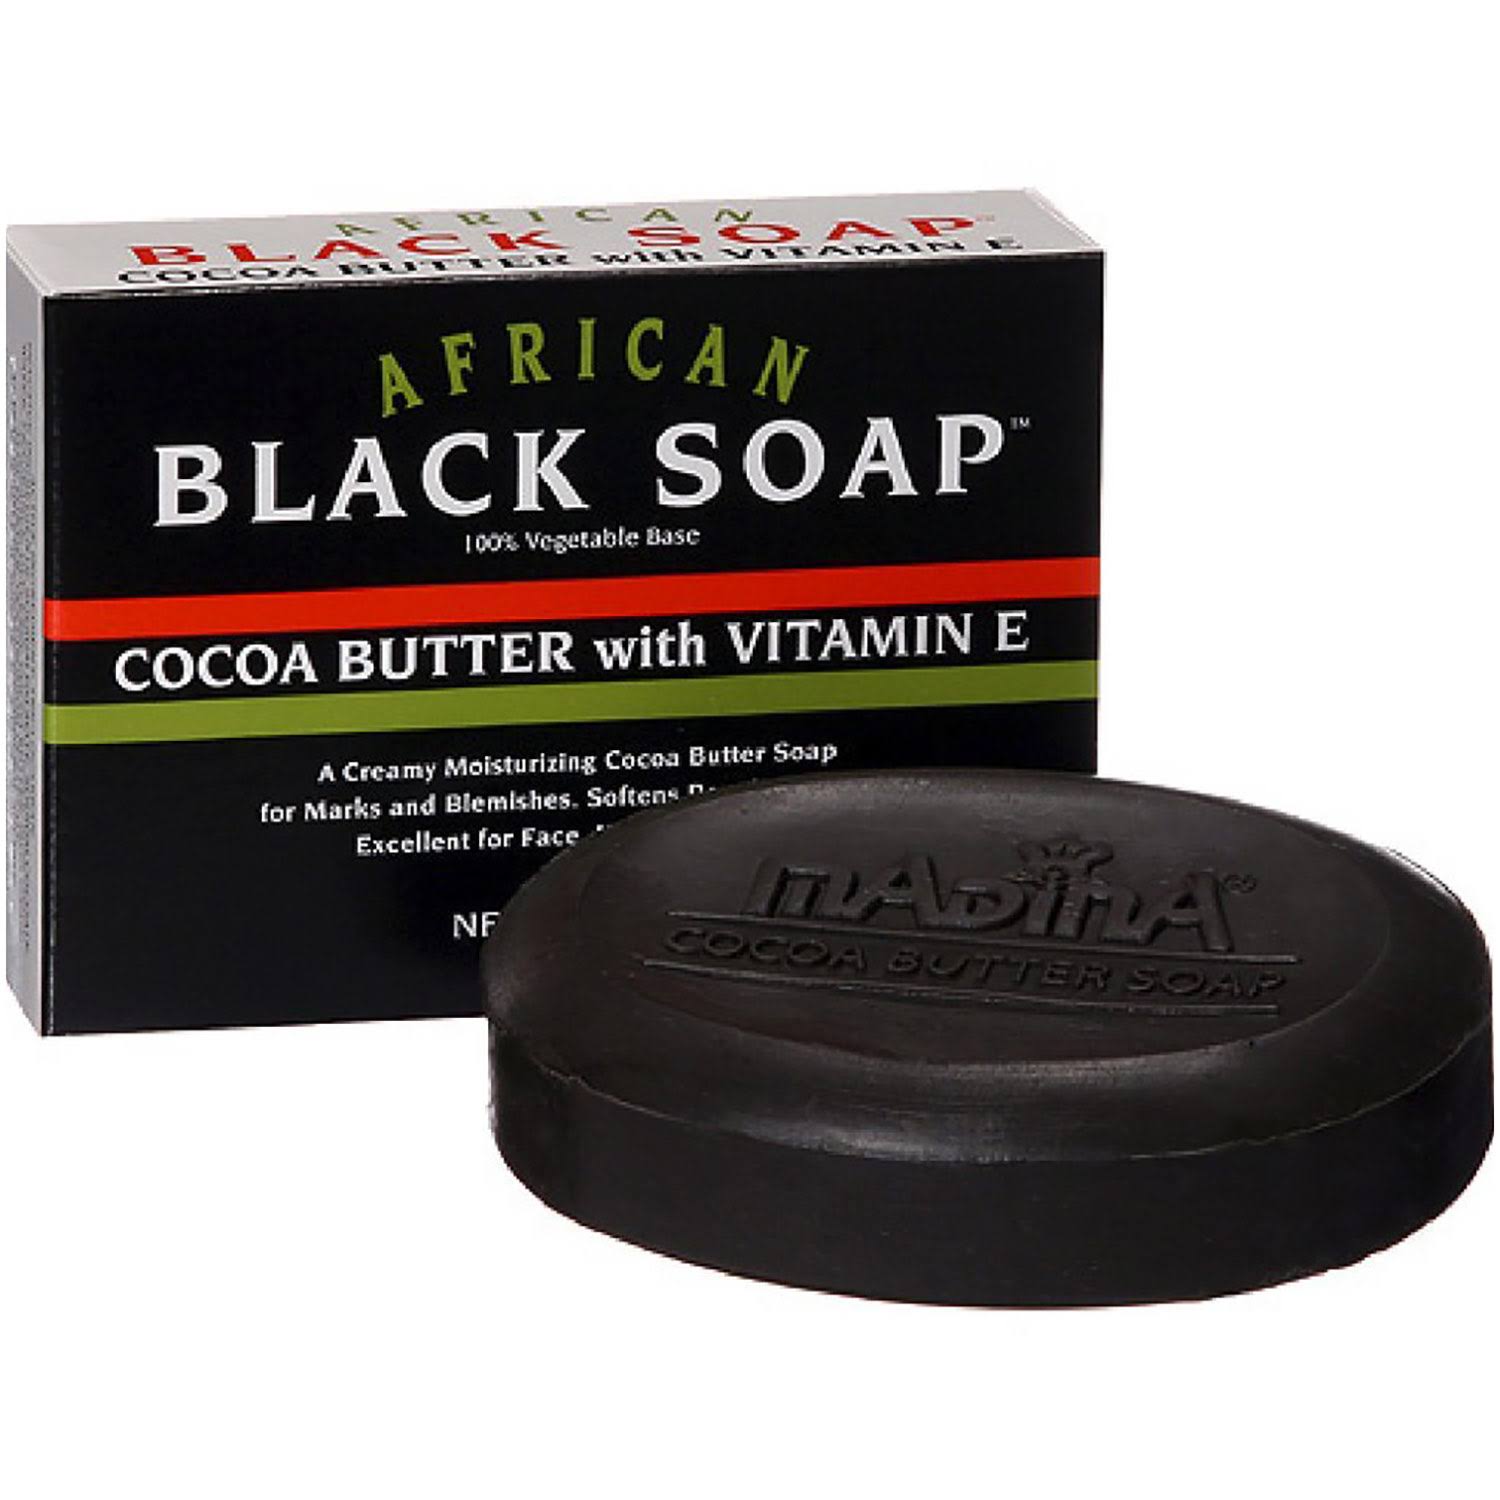 Madina African Black Soap - Cocoa Butter with Vitamin E, 3.5oz